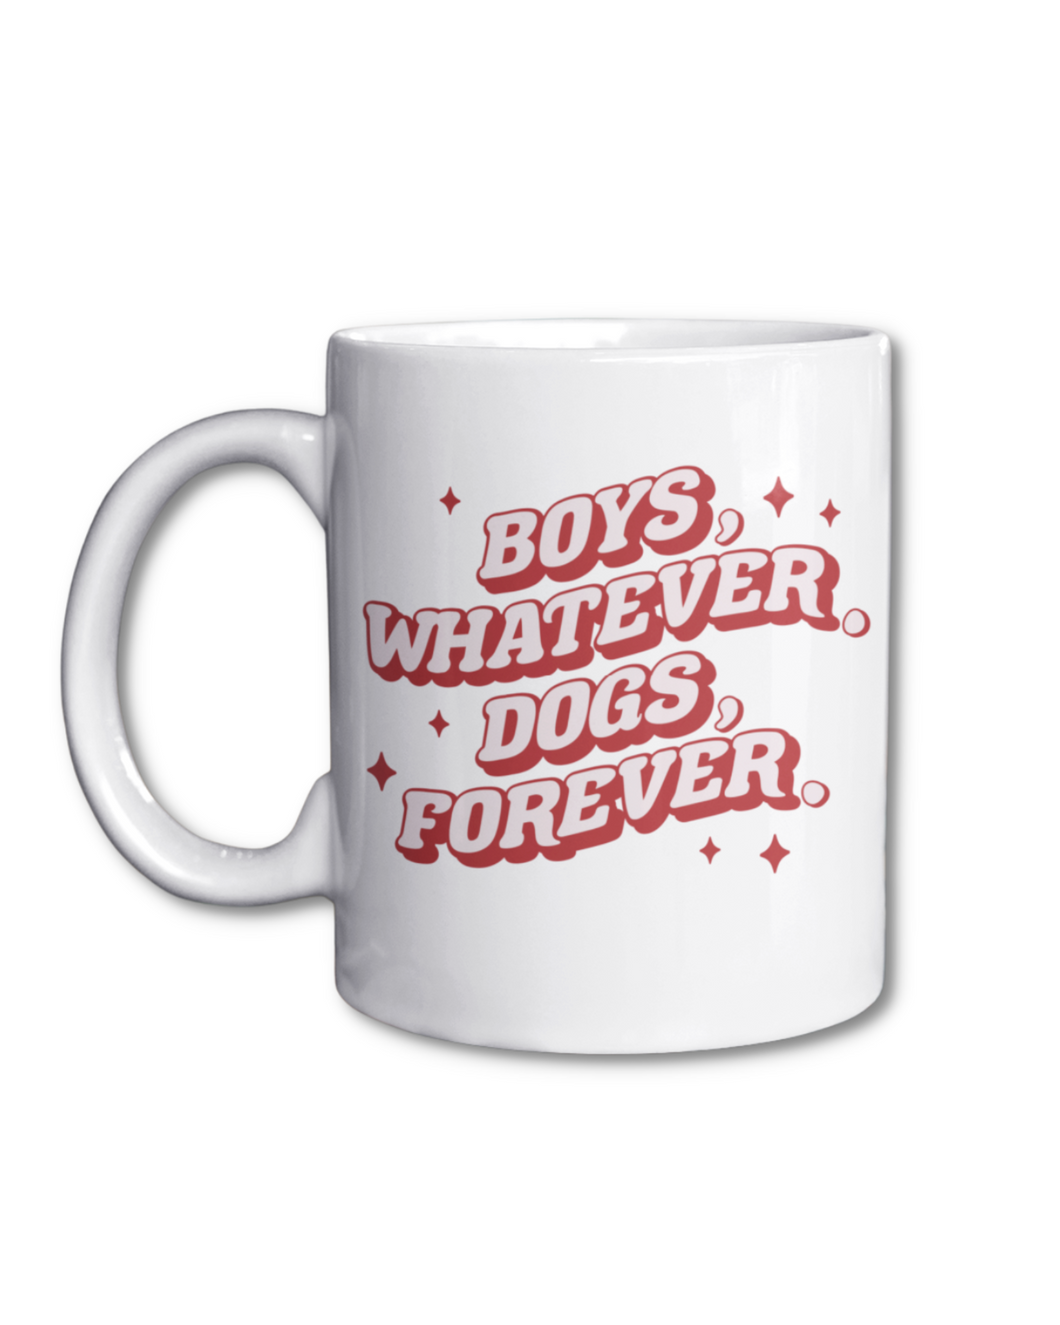 Boys Whatever, Dogs Forever 11oz White Mug